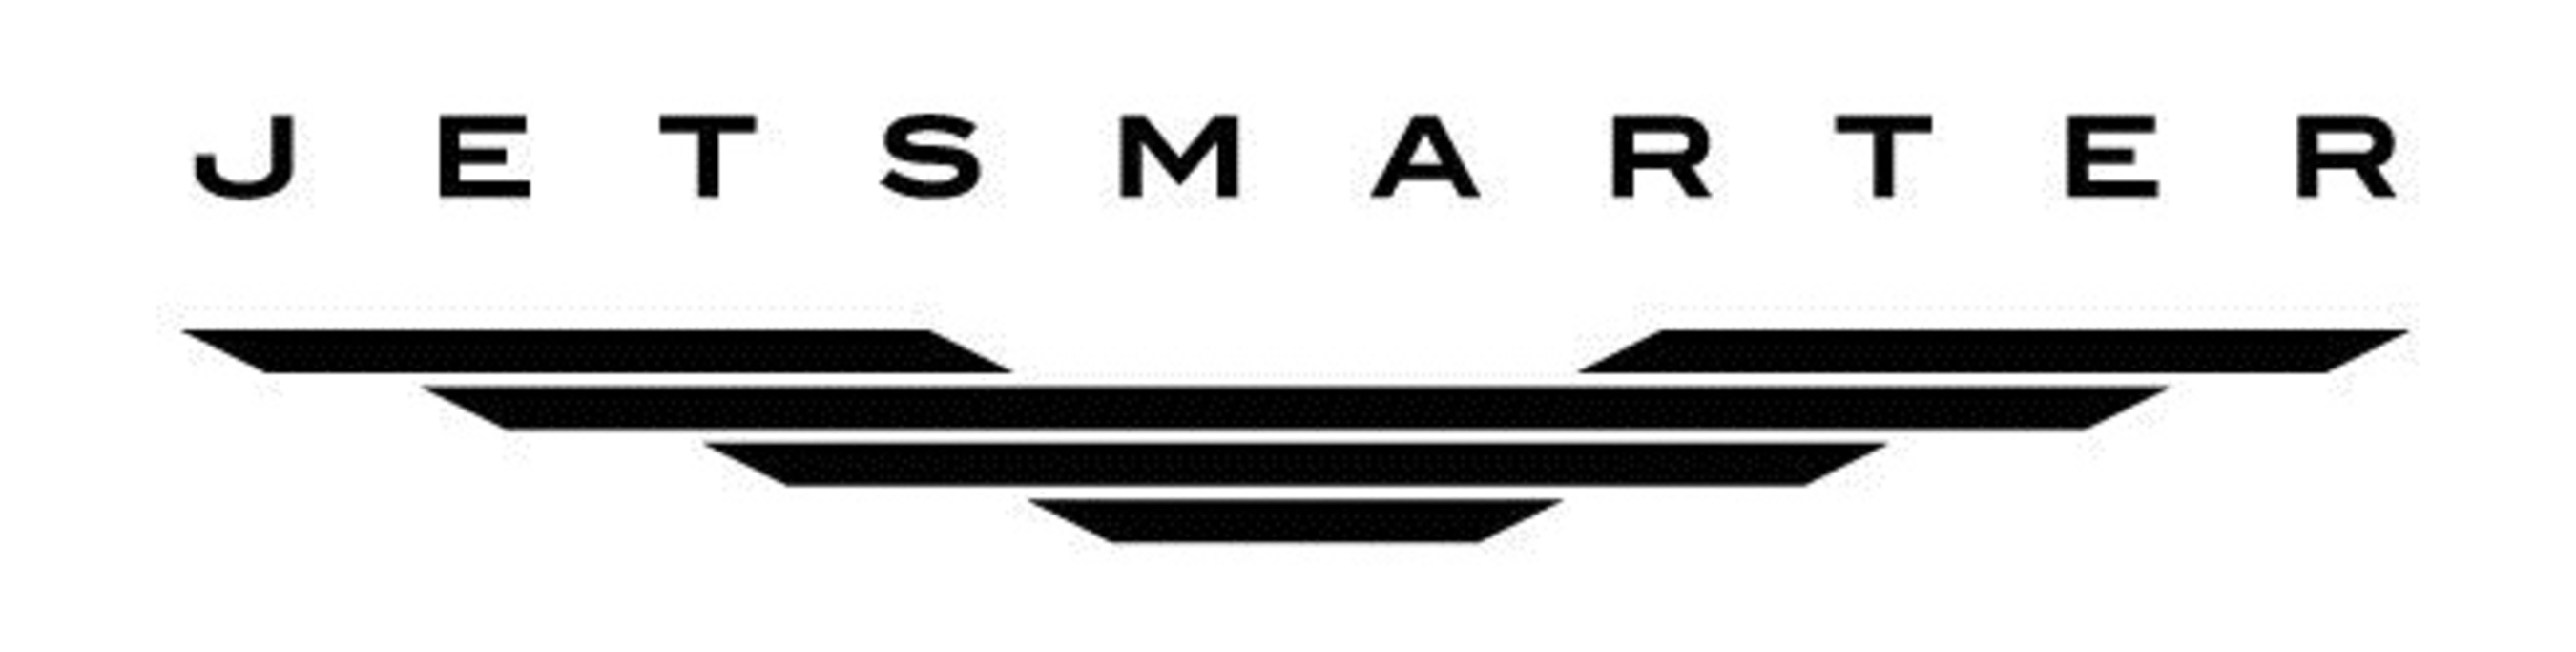 JetSmarter logo.